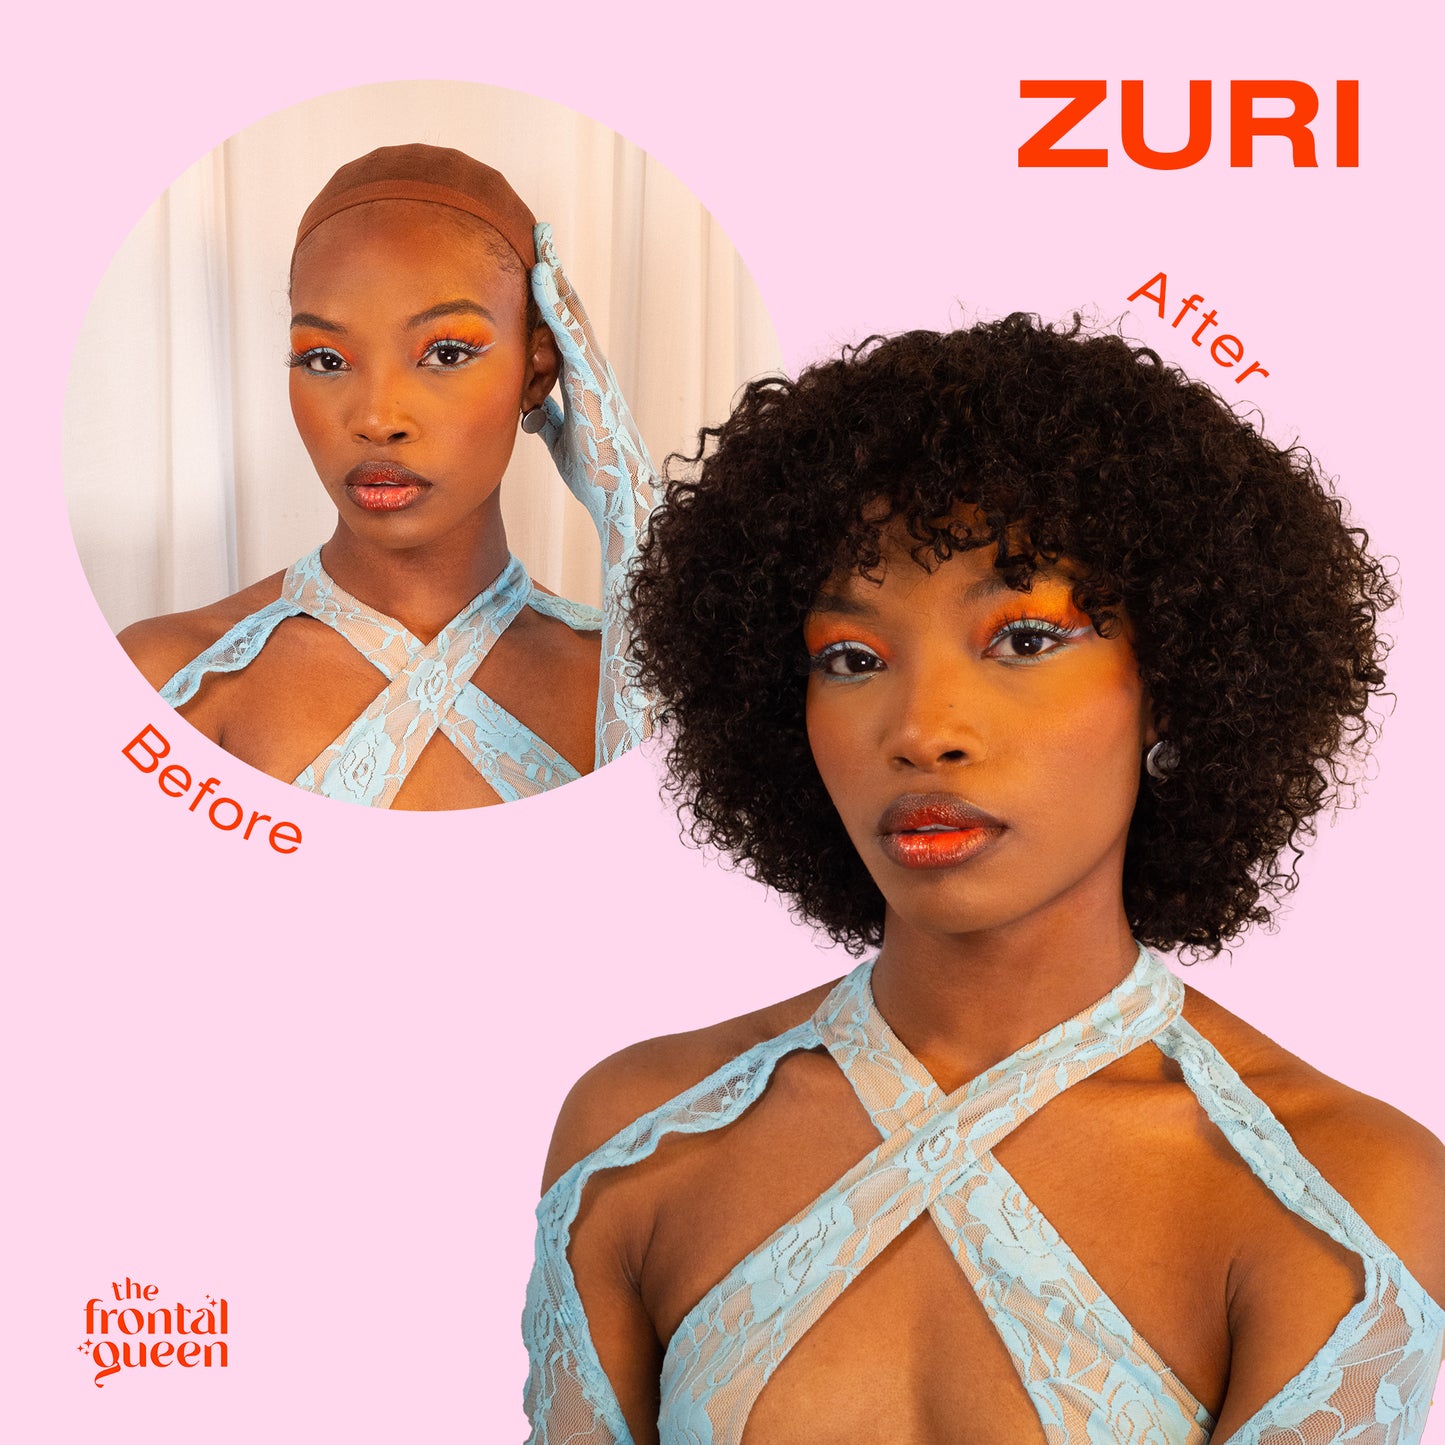 ZURI - QUICK WIG - The Frontal Queen